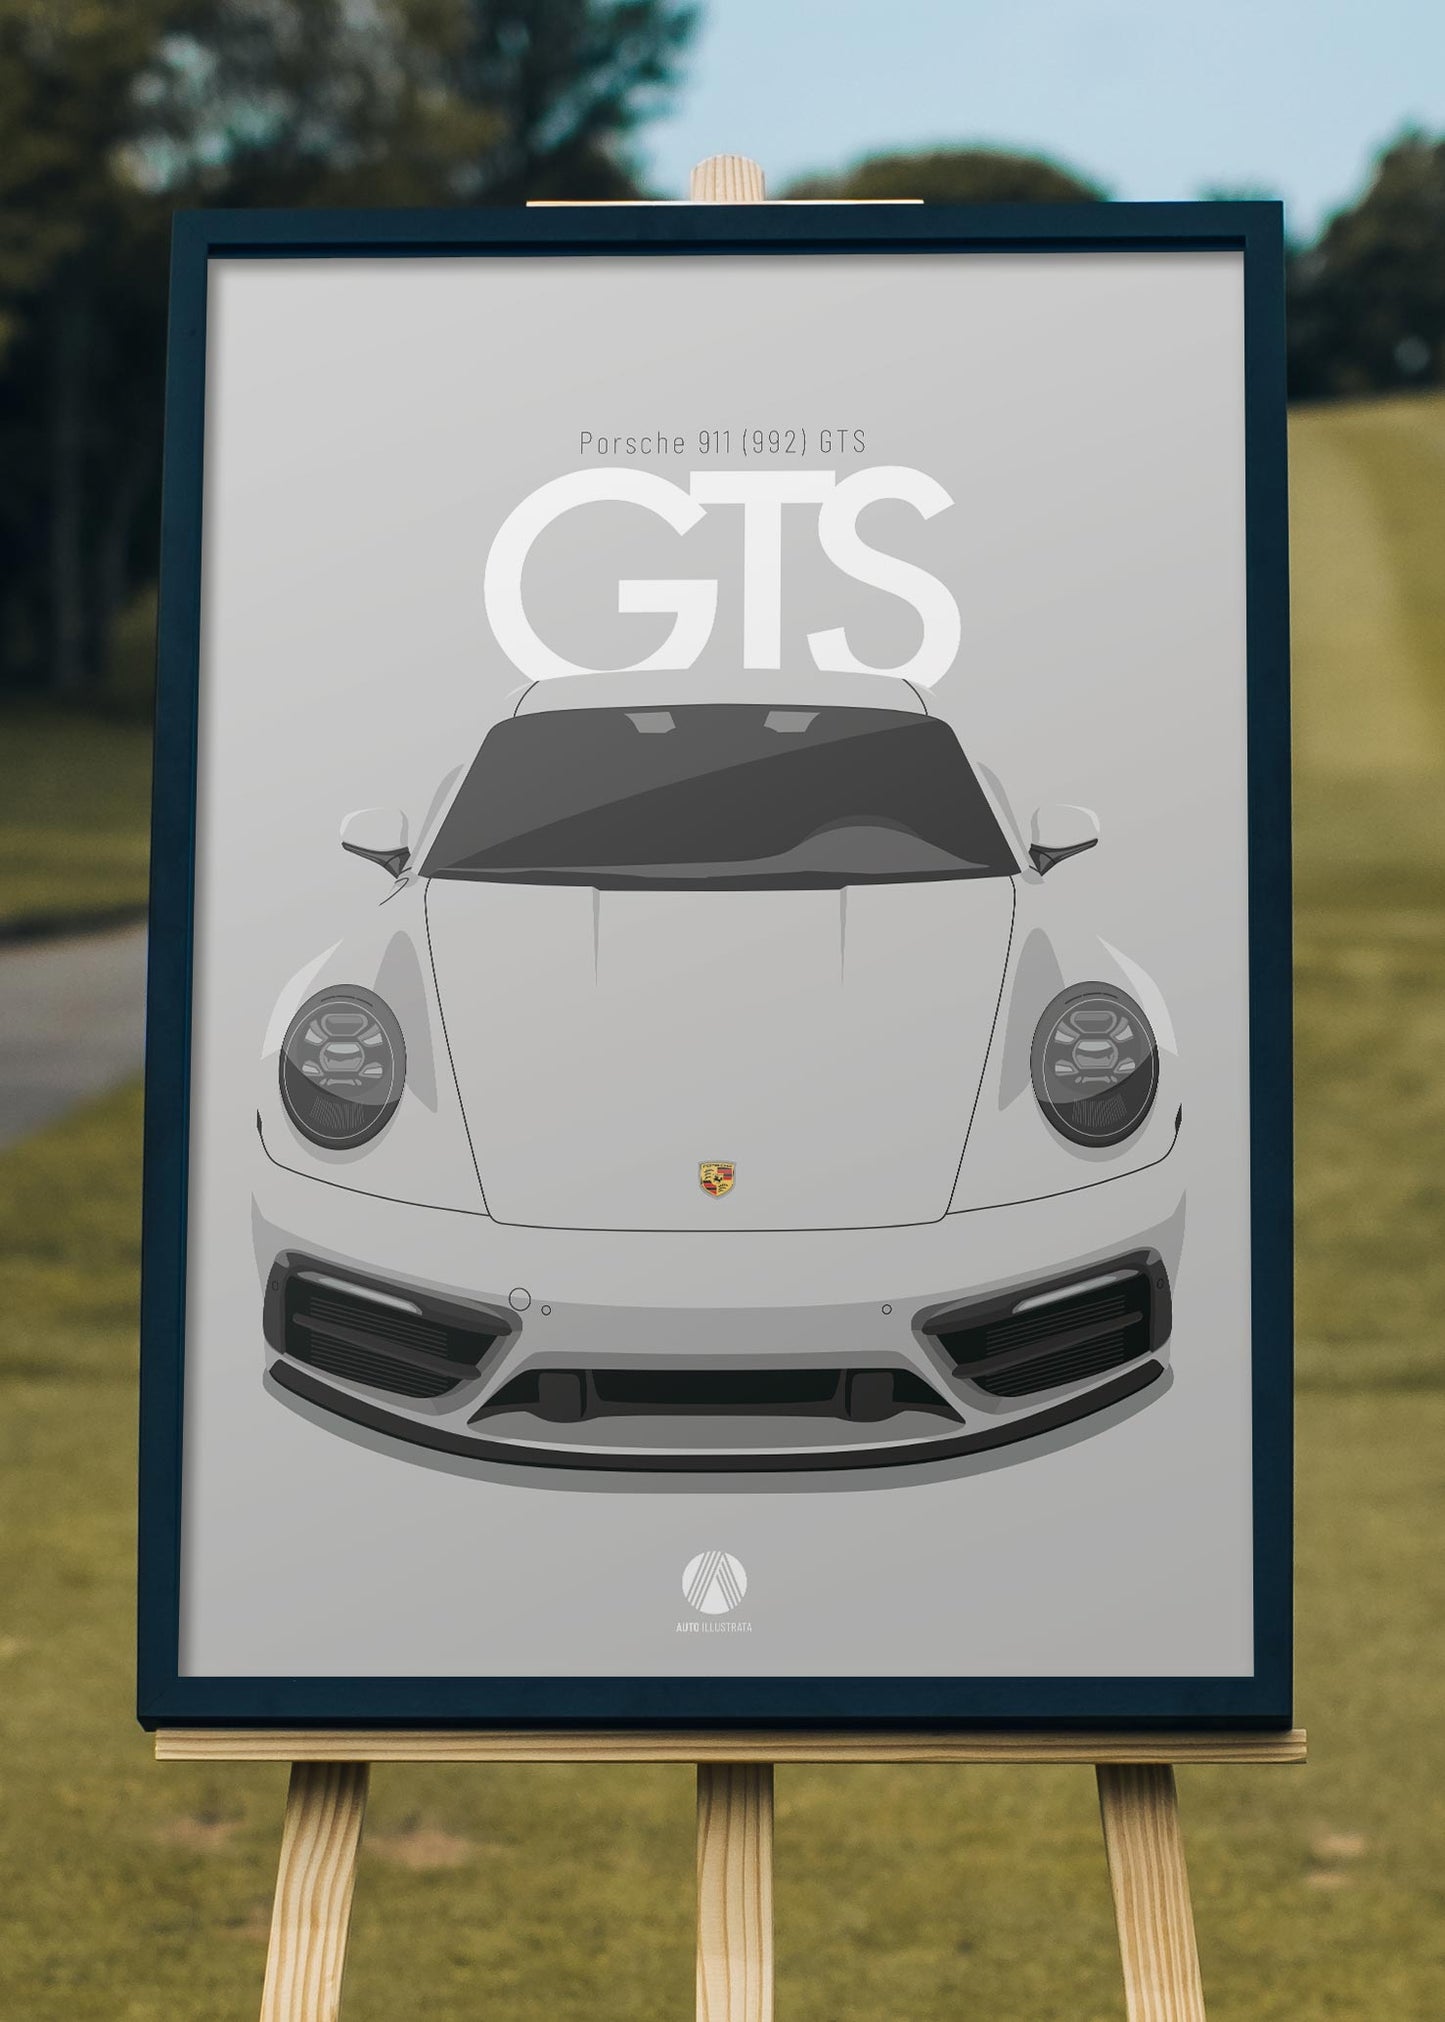 2021 Porsche 911 (992) GTS Crayon - poster print